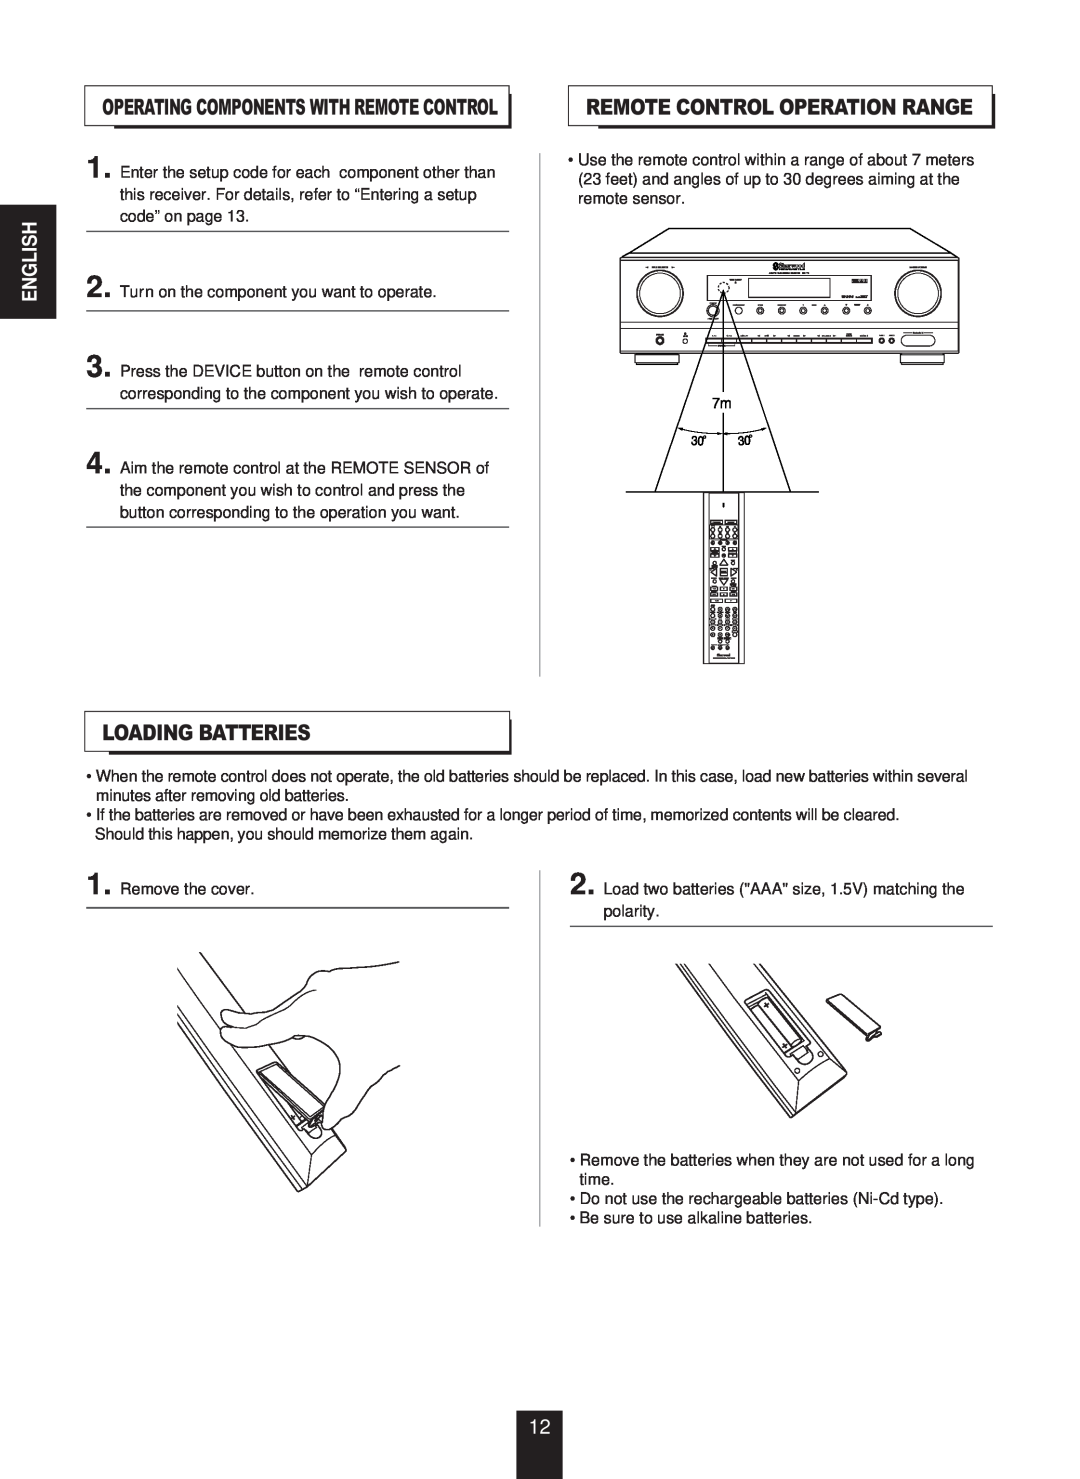 Sherwood RX-773 manual Loading Batteries, Remote Control Operation Range, English 